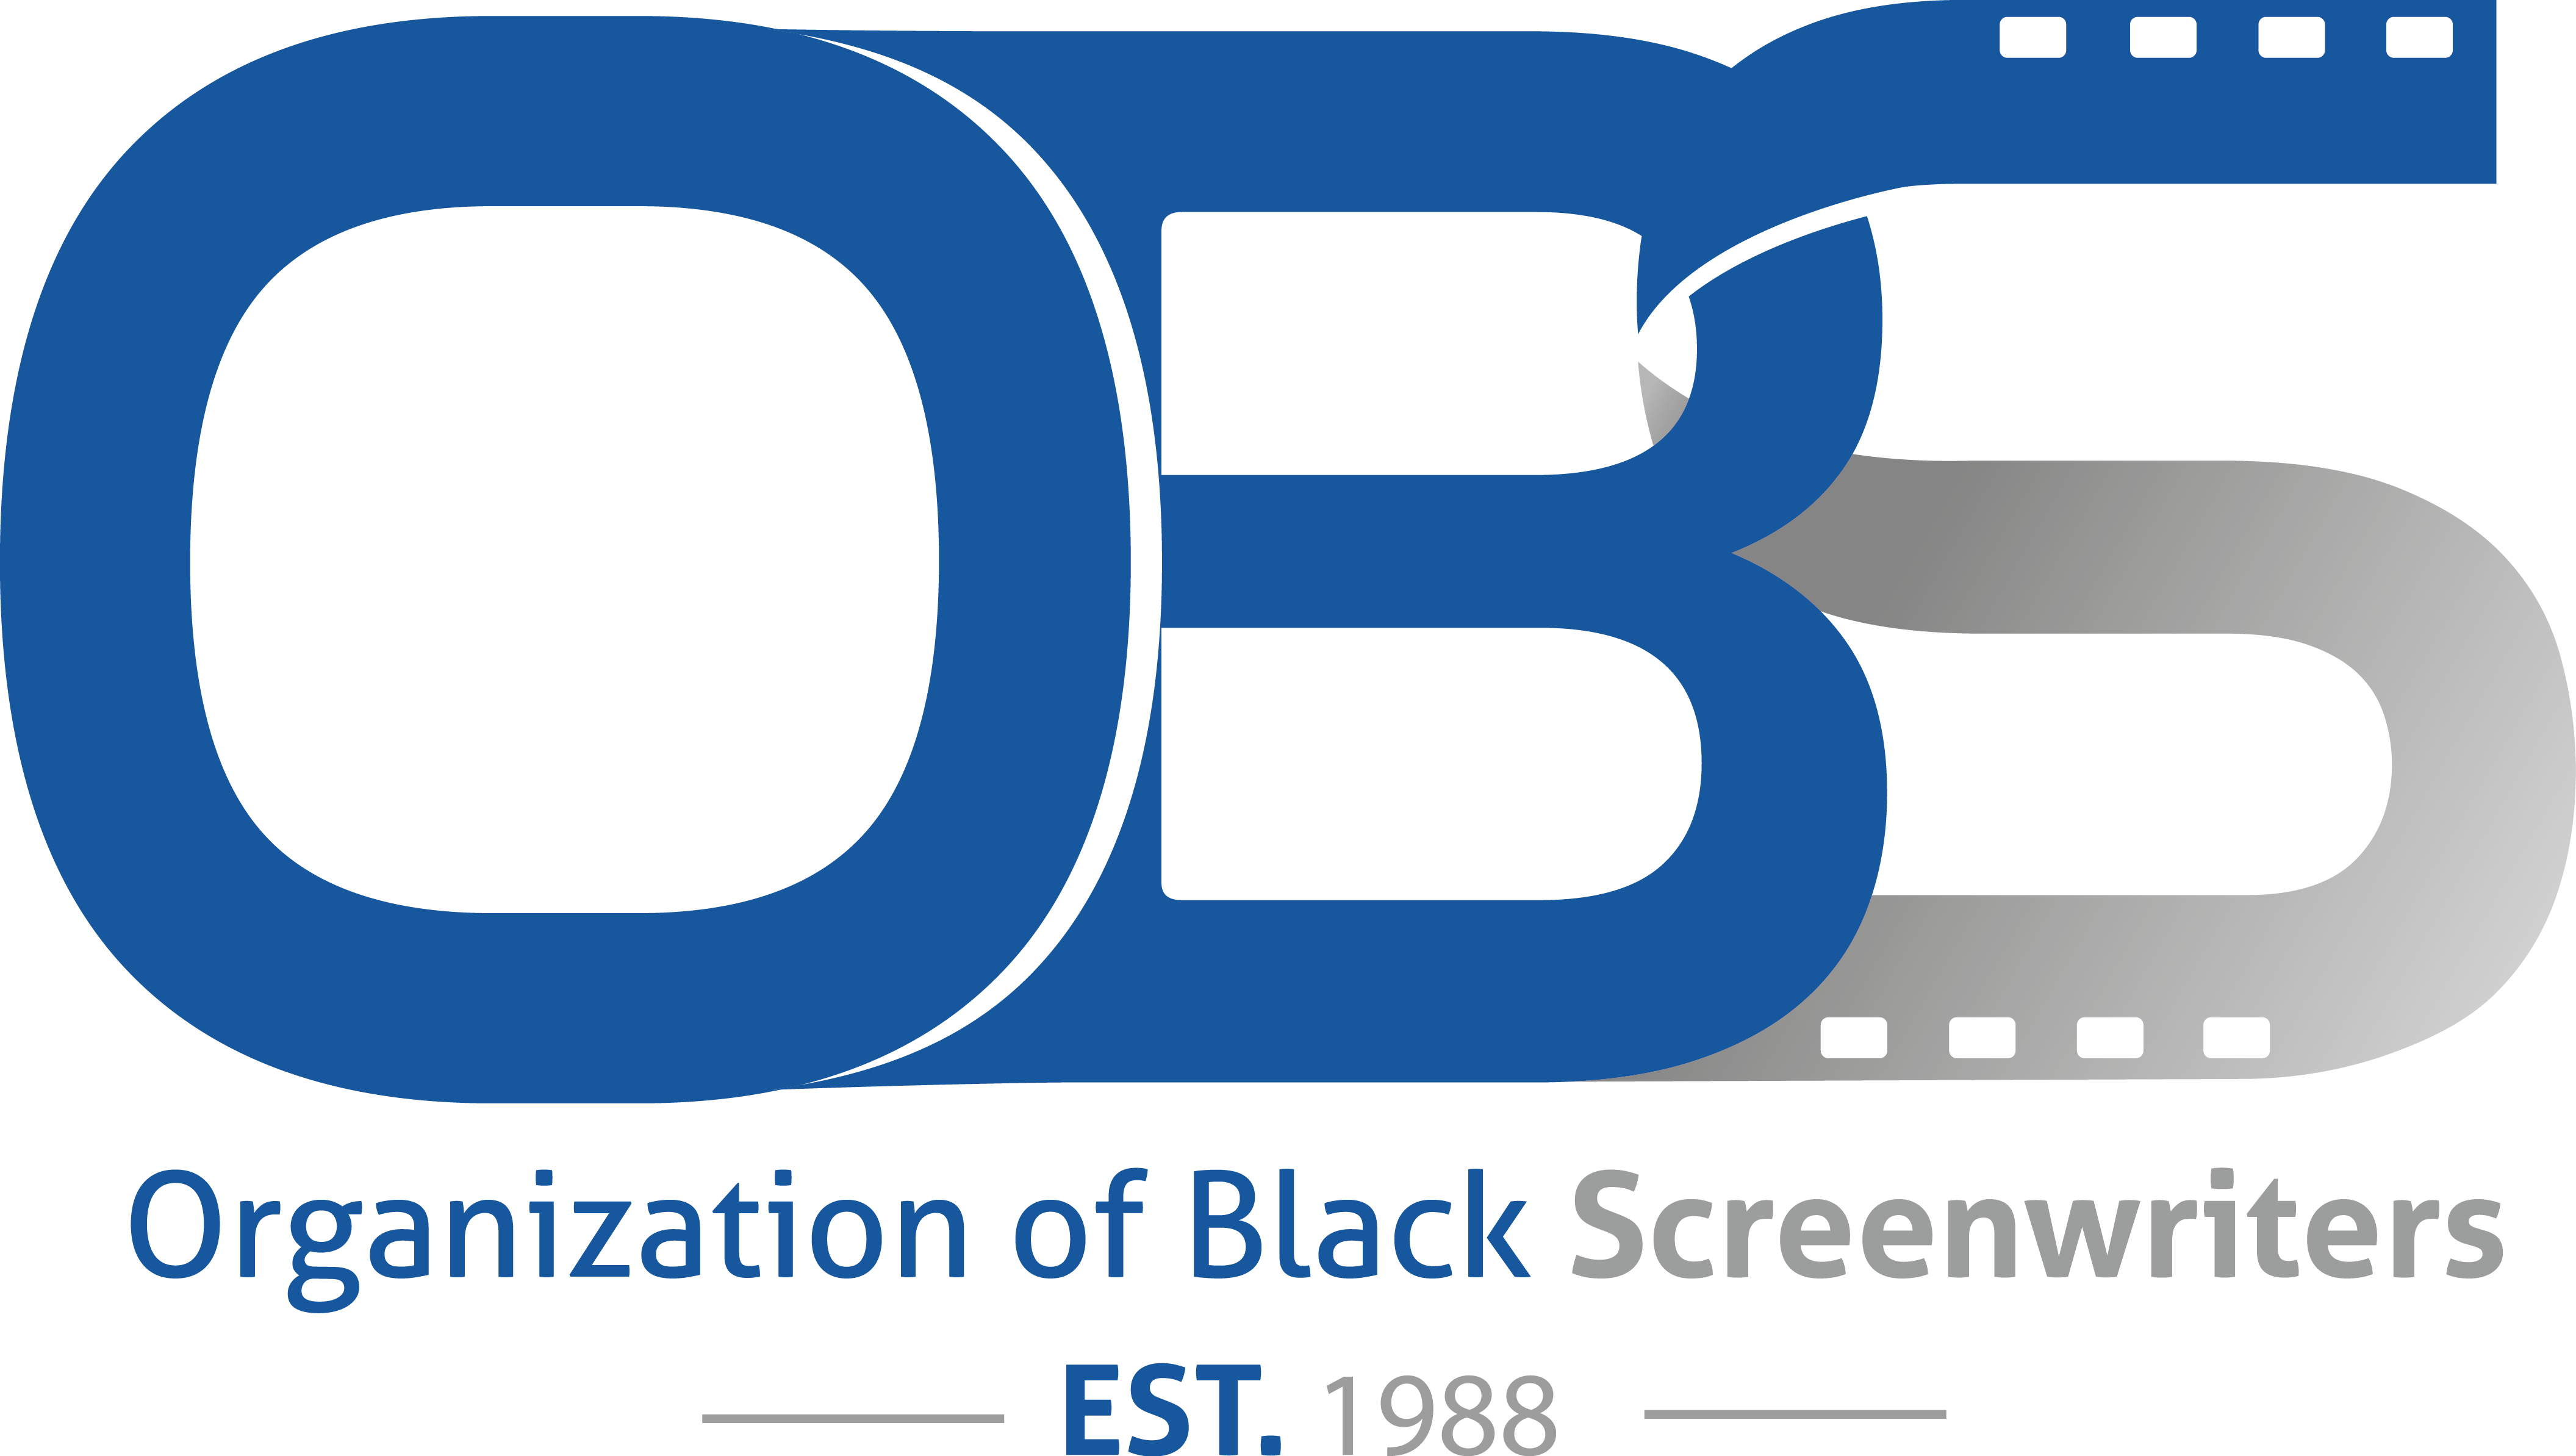 Organization of Black Screenwriters